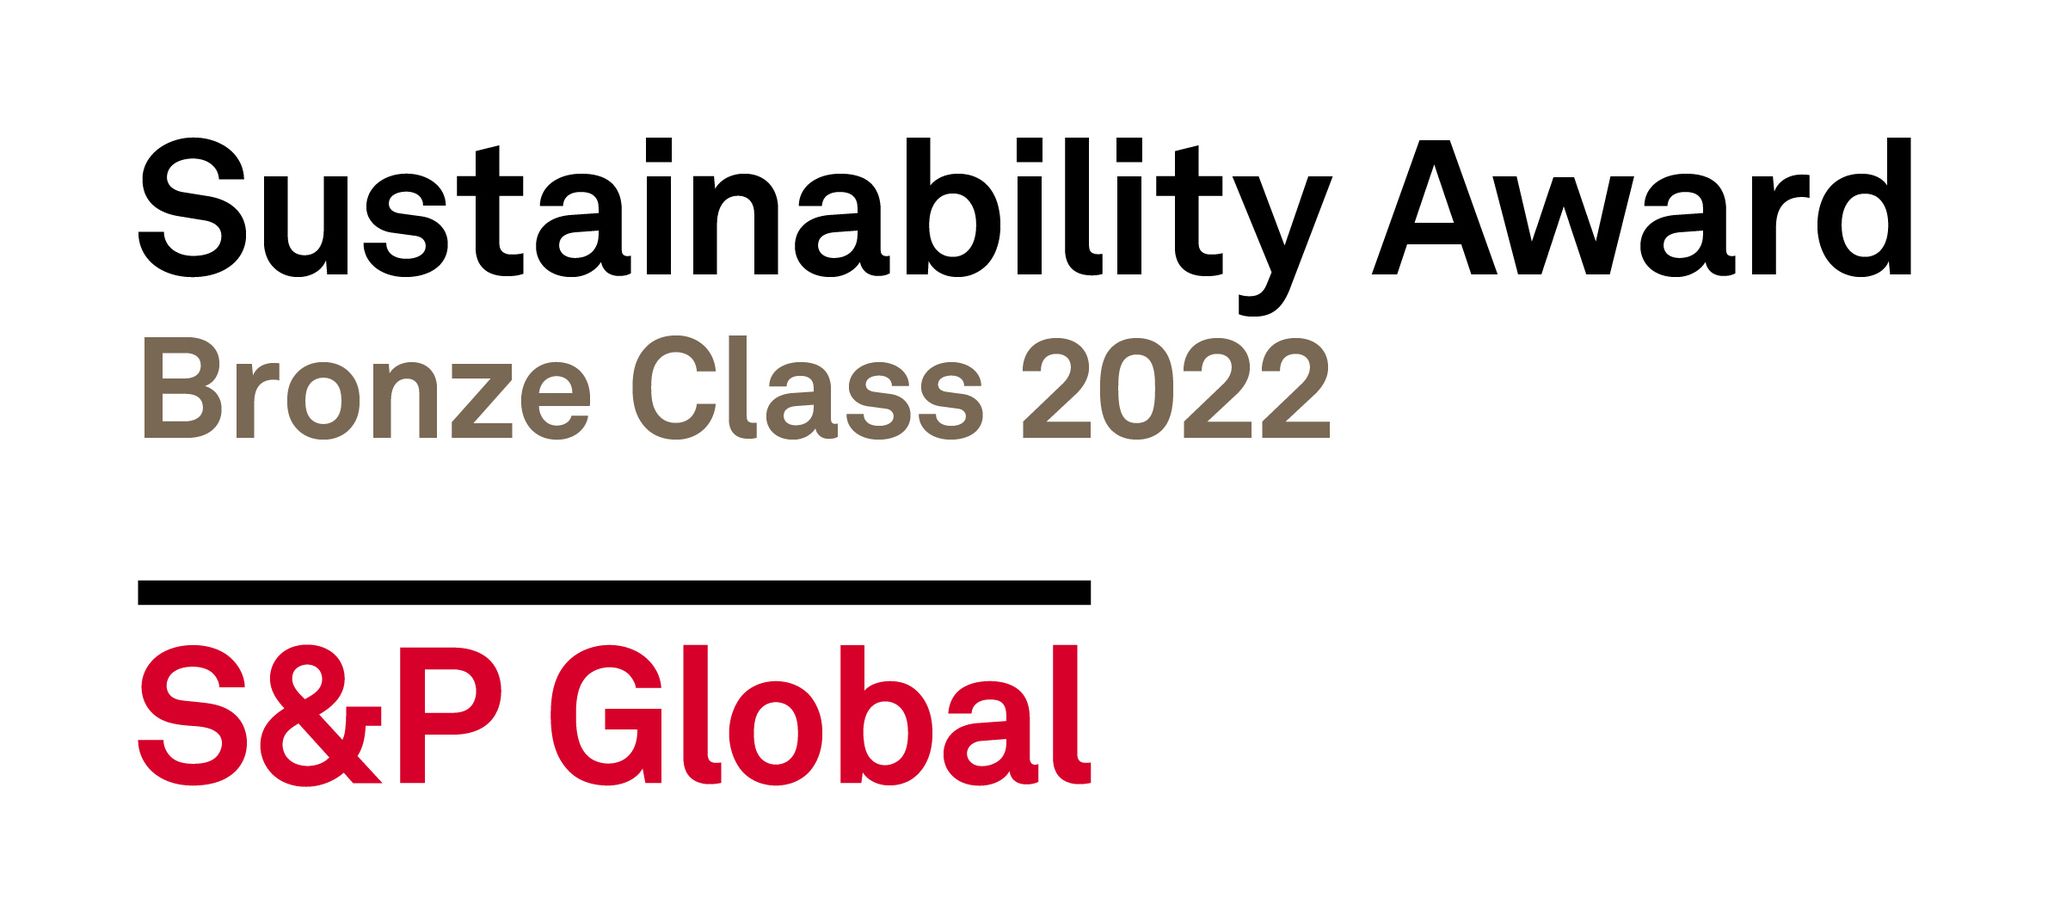 Sustainability Award Bronze Class 2022 S&P Global